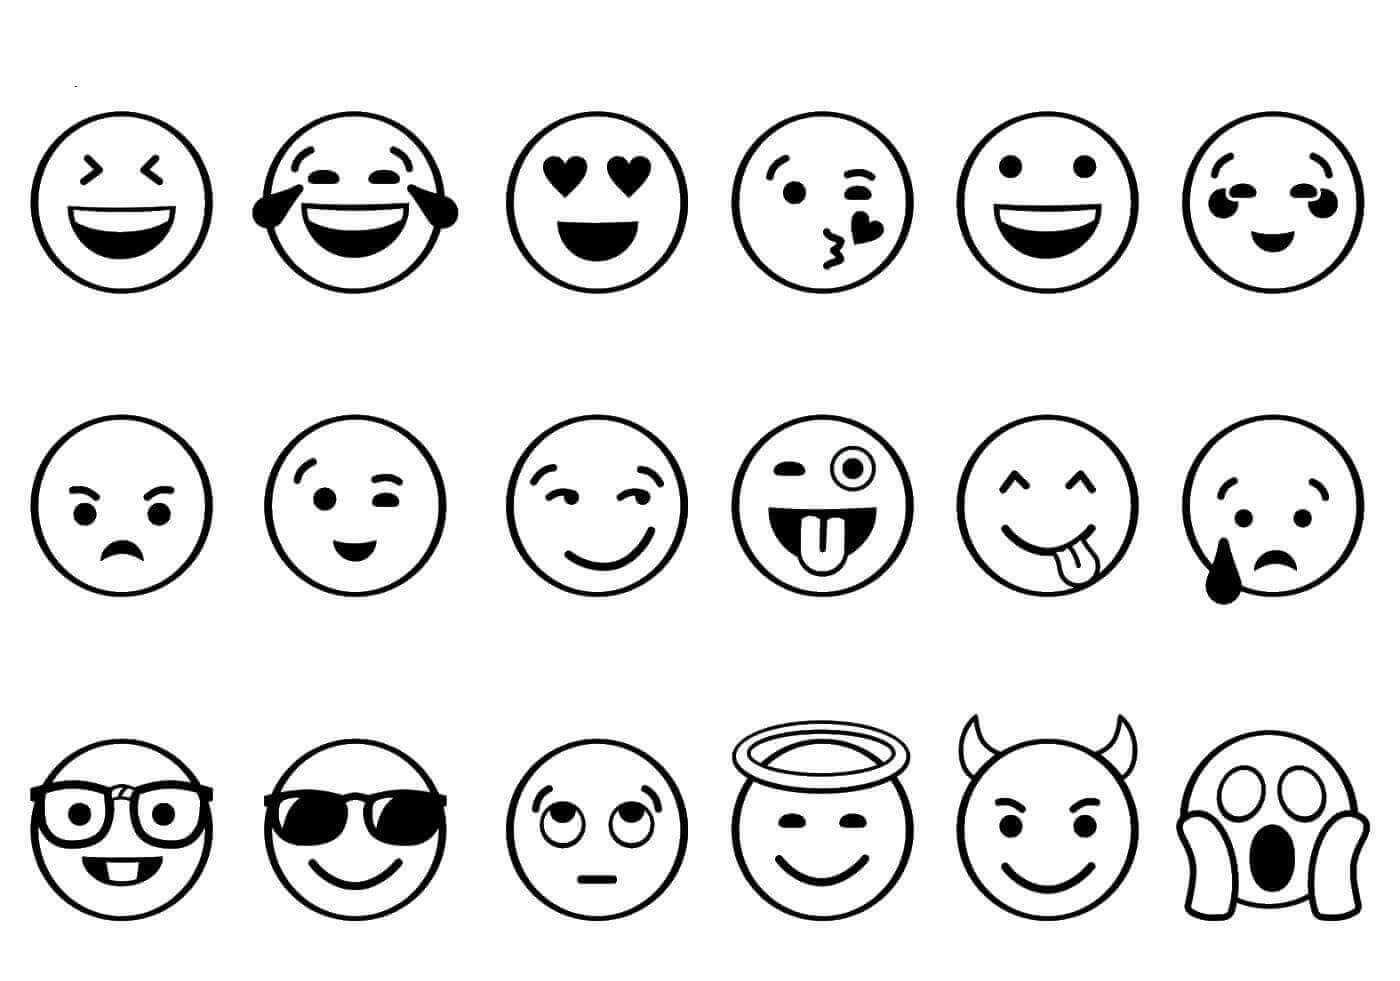 Emoji Coloring Pages Free Printable
 Free Printable Emoji Coloring Pages